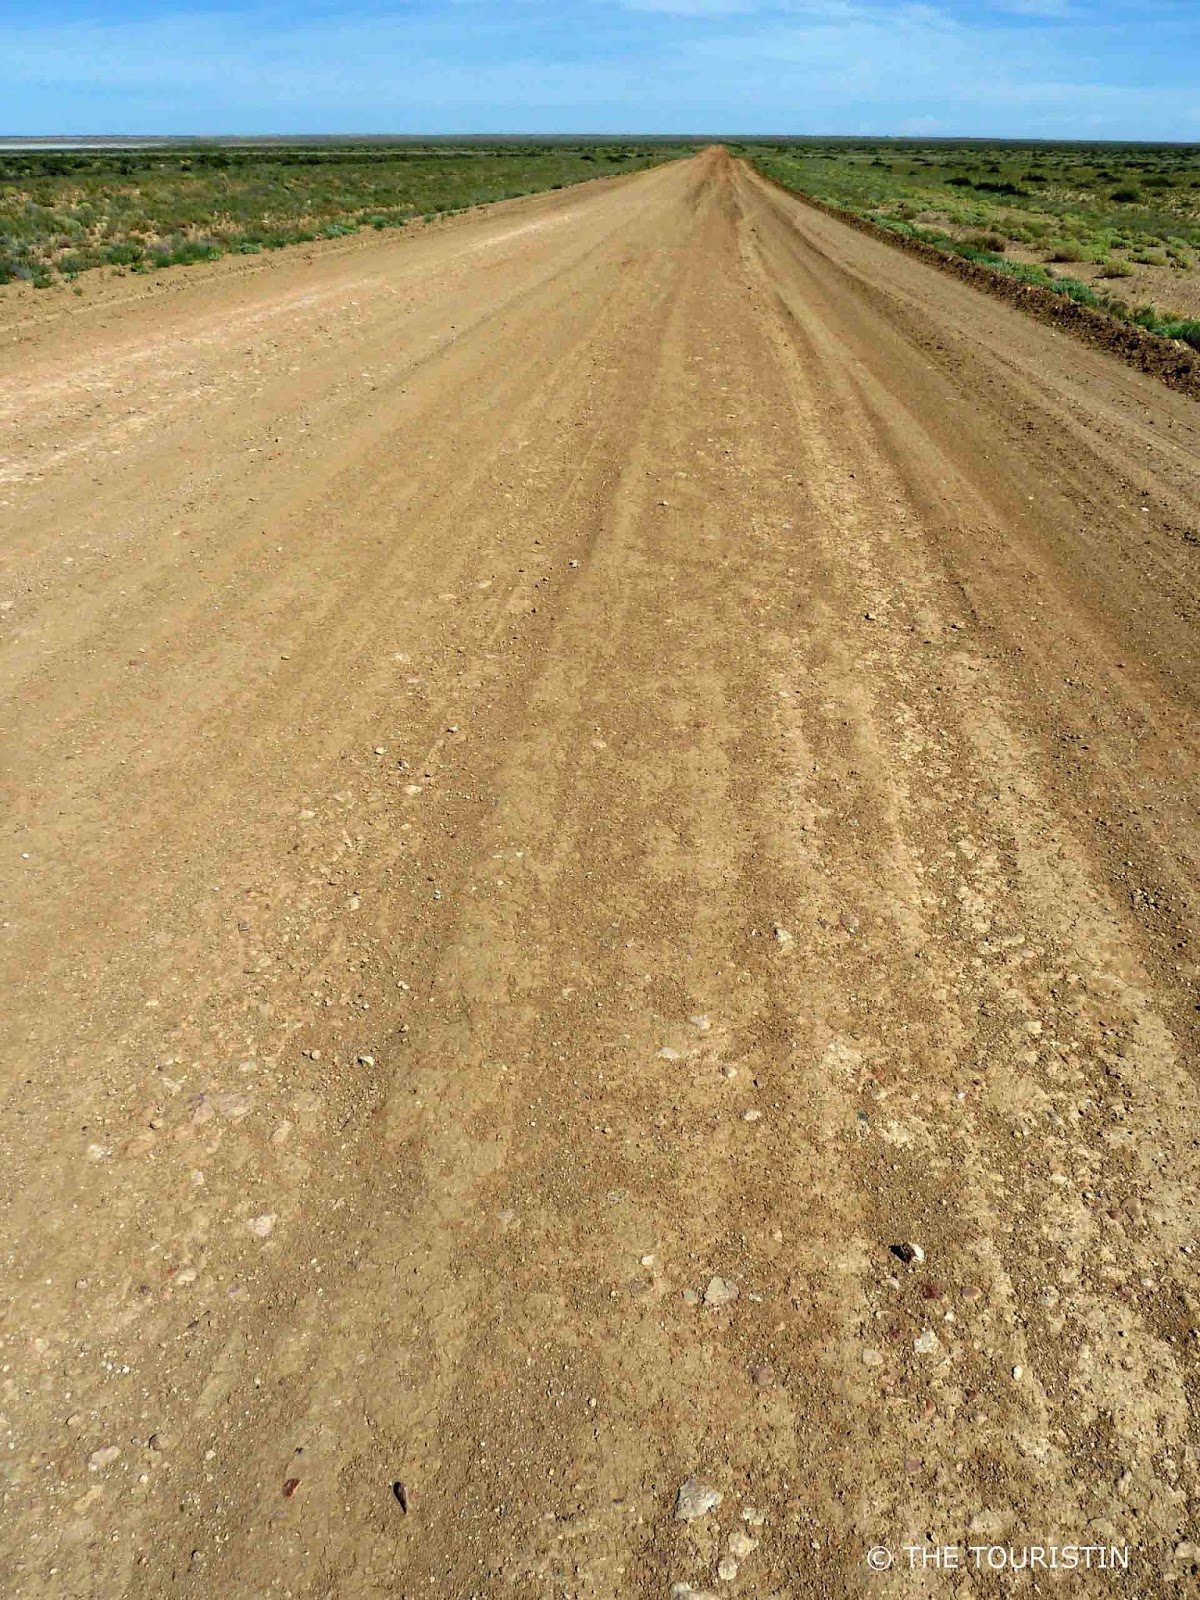 A flat dusty untarred road in a seemingly endless flat landscape.